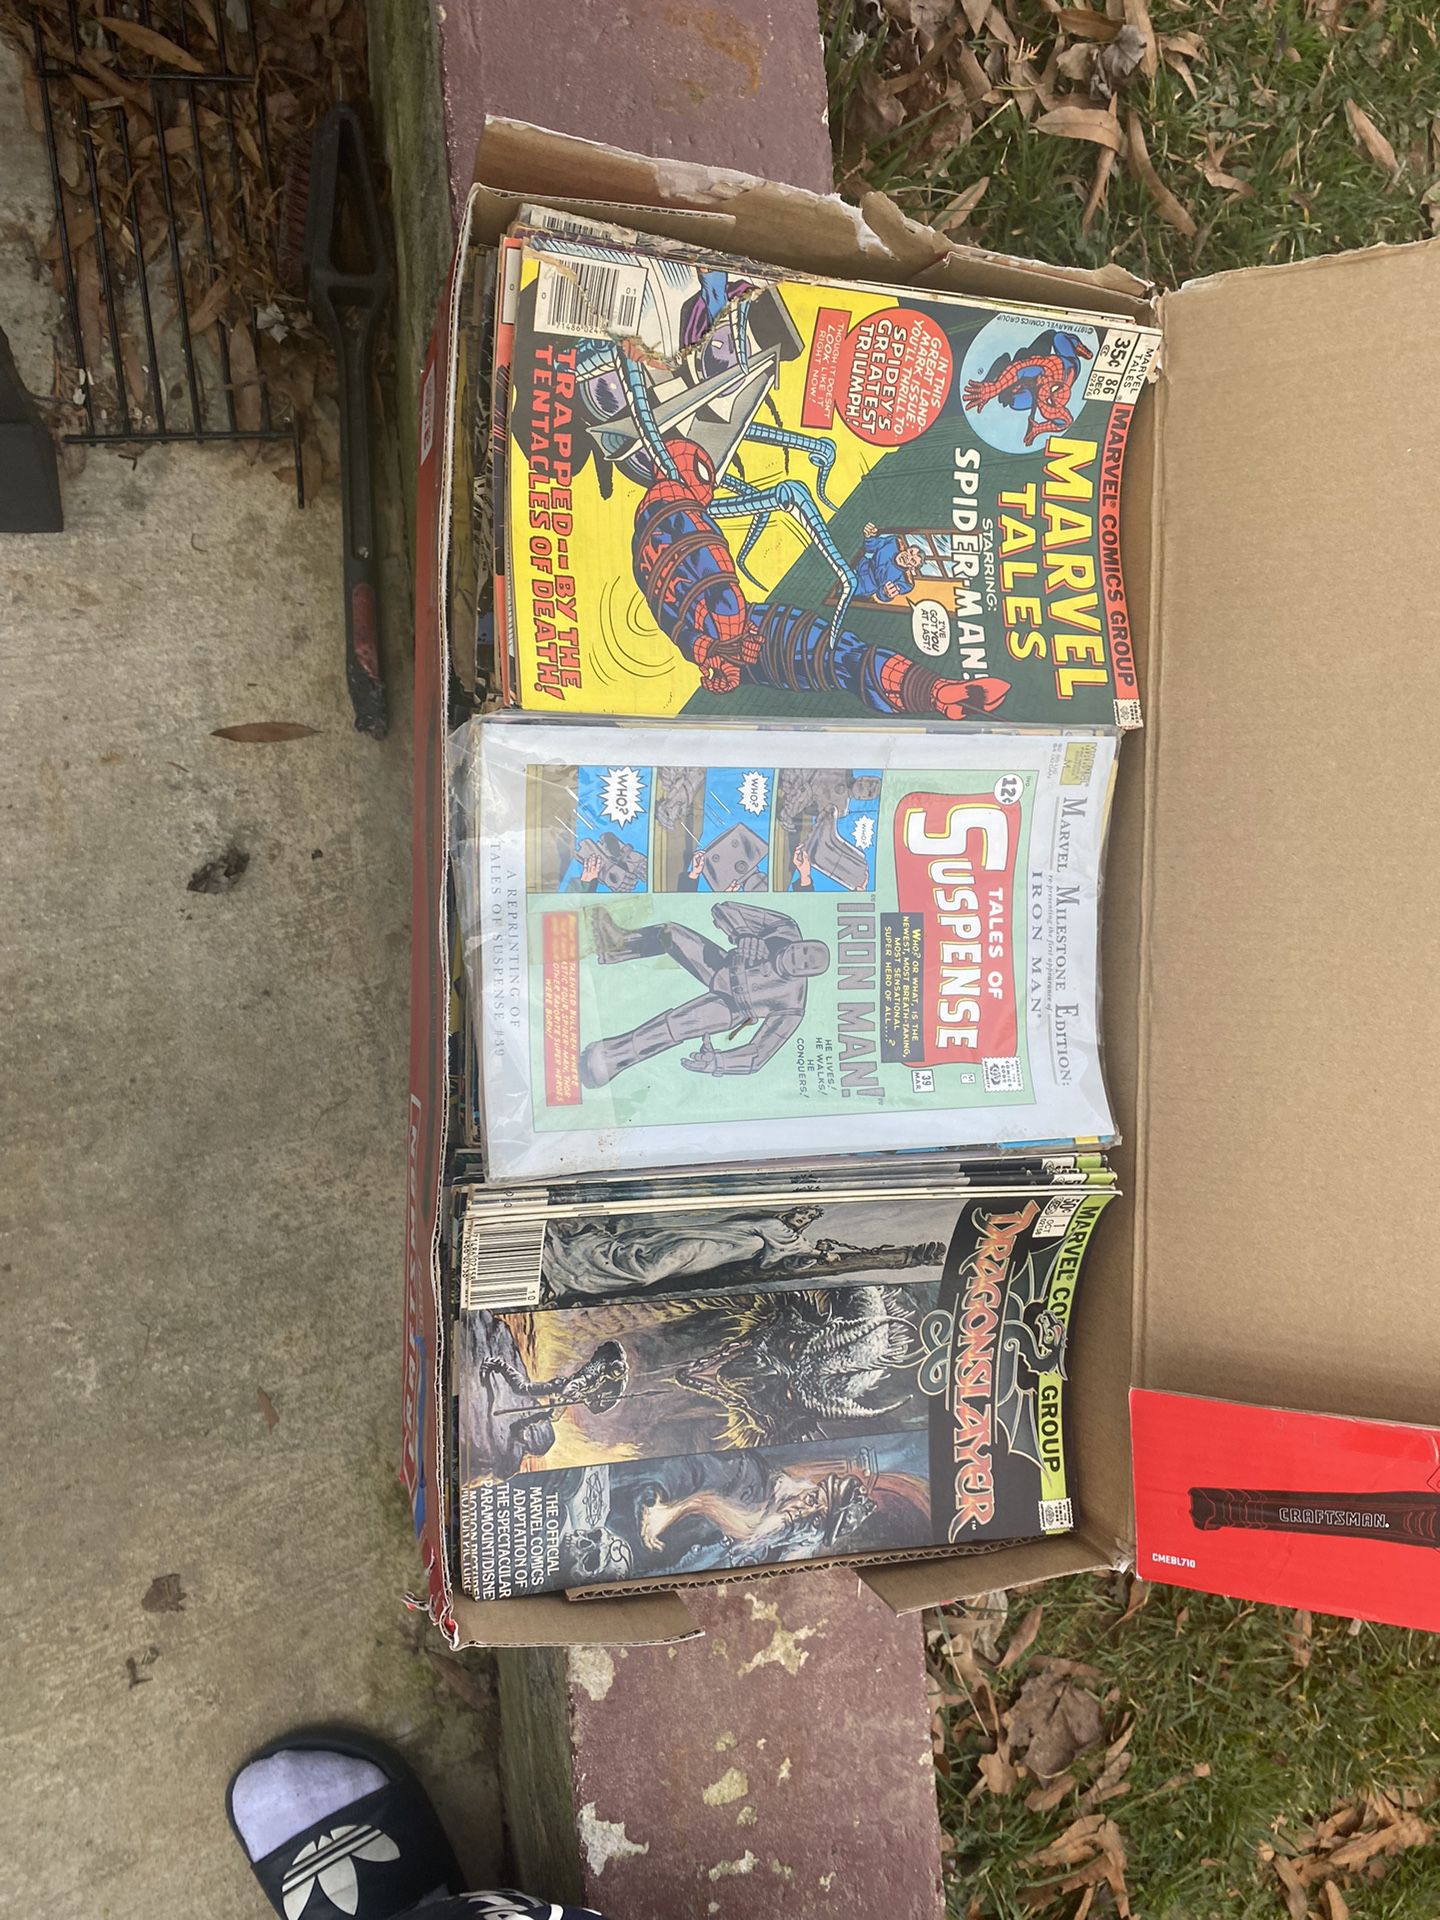 Old Marvel Comic Books